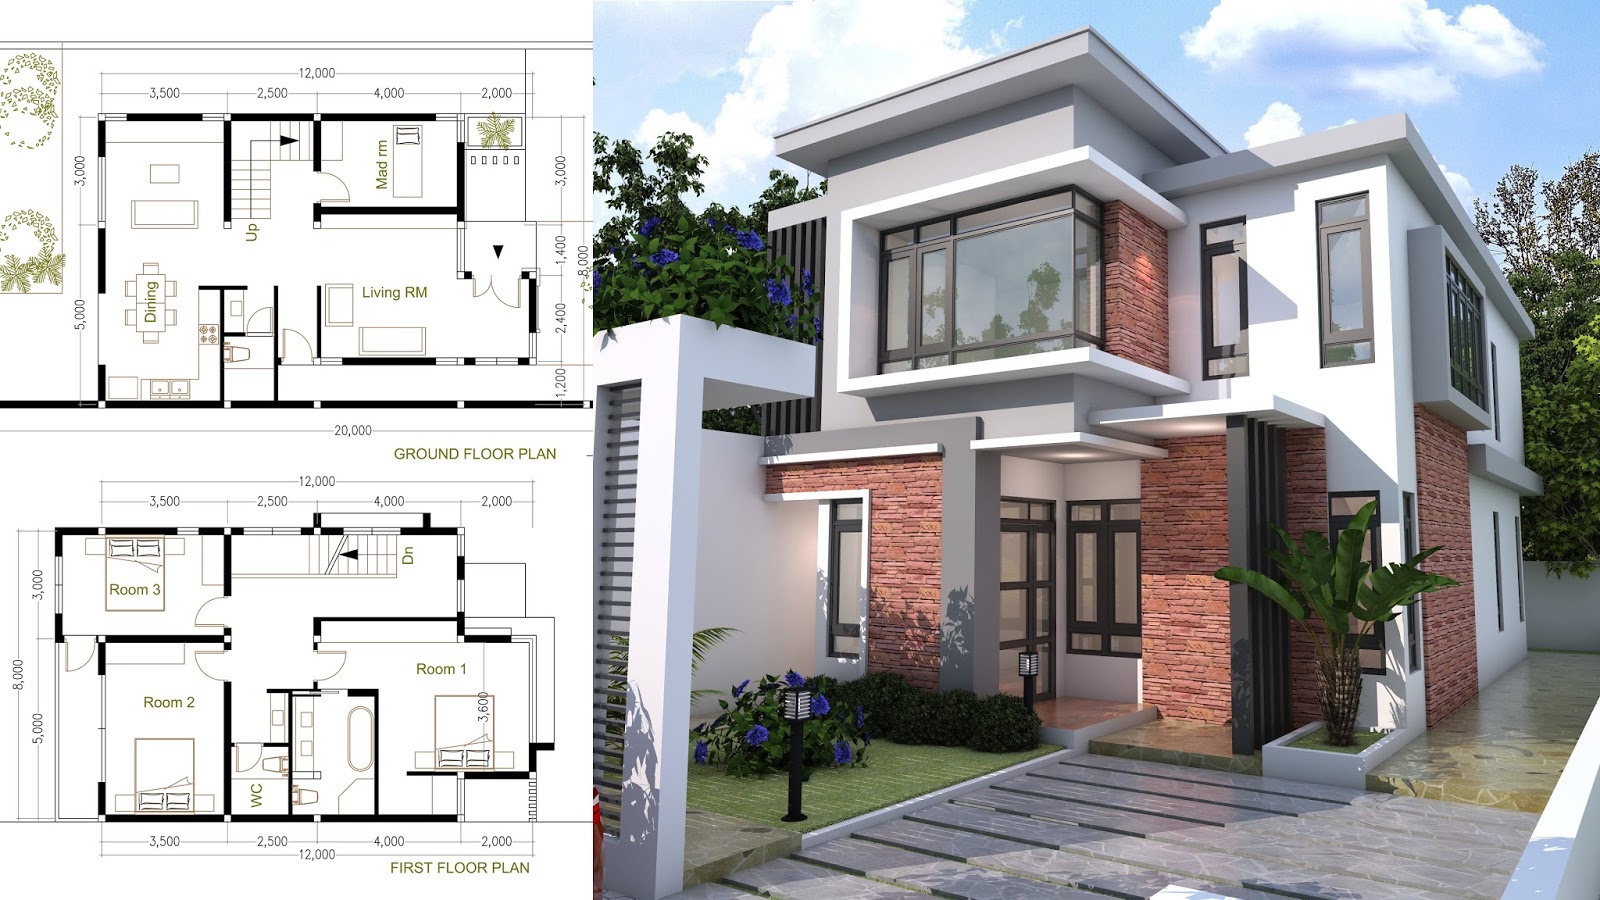  SketchUp  Modern Home  Plan  Size 8x12m House  Plan  Map